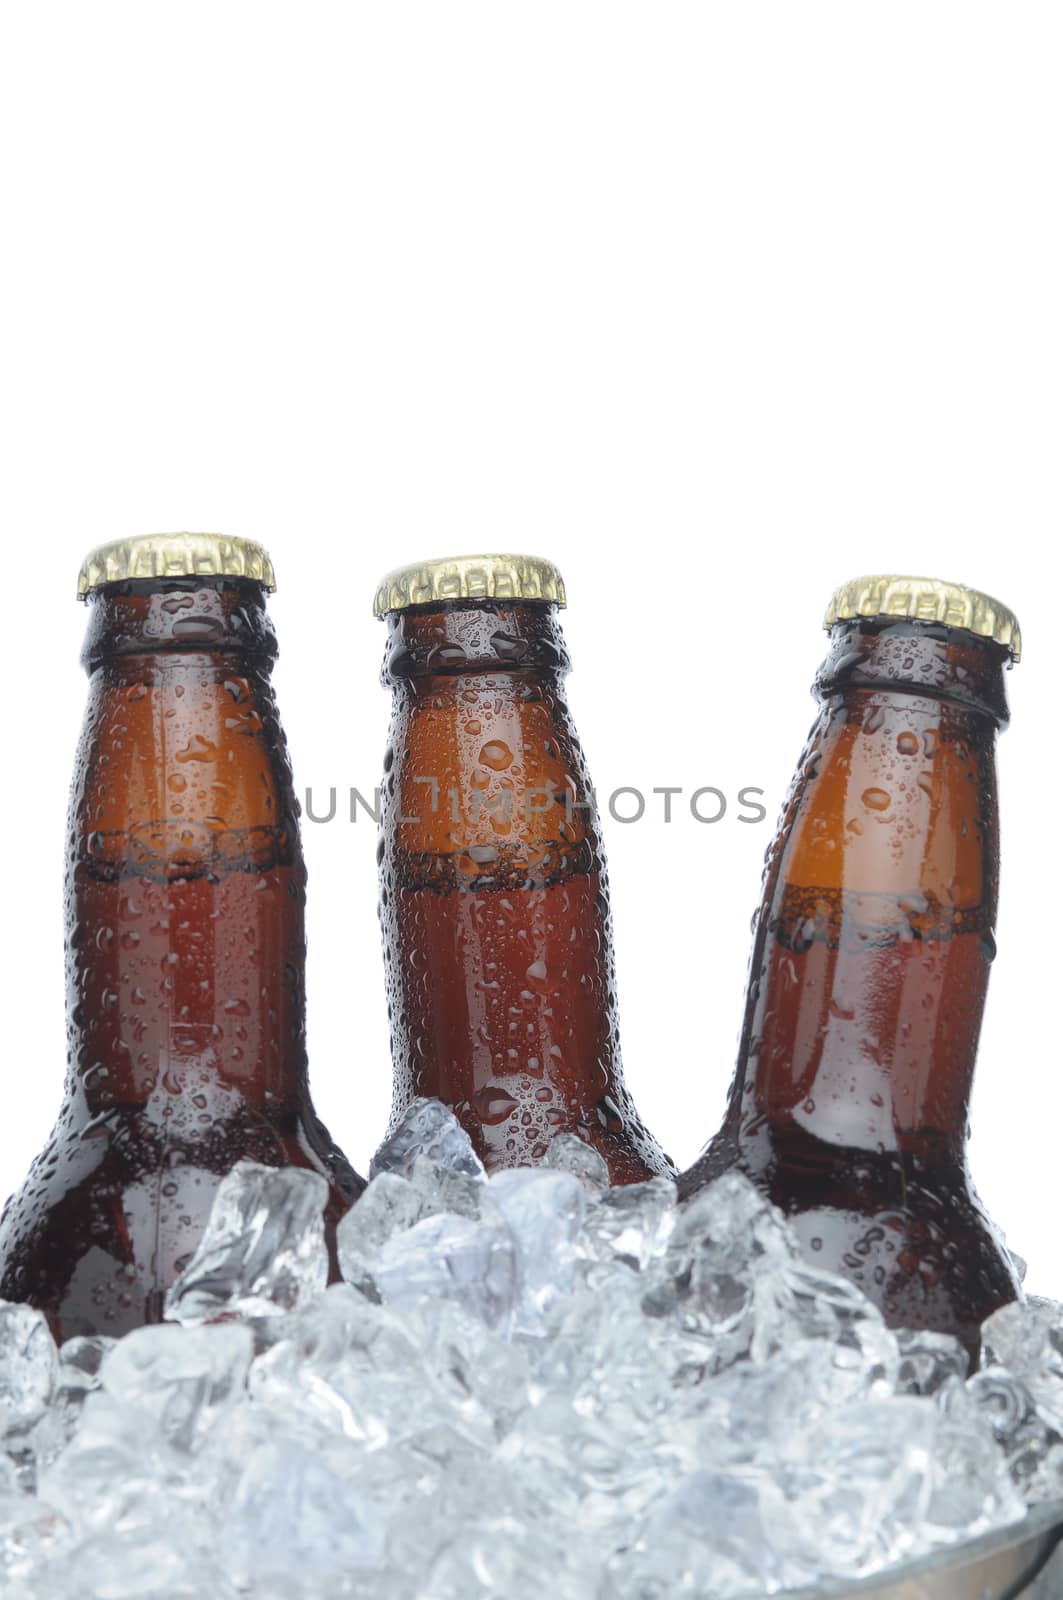 Three Brown Beer Bottles in Ice by sCukrov